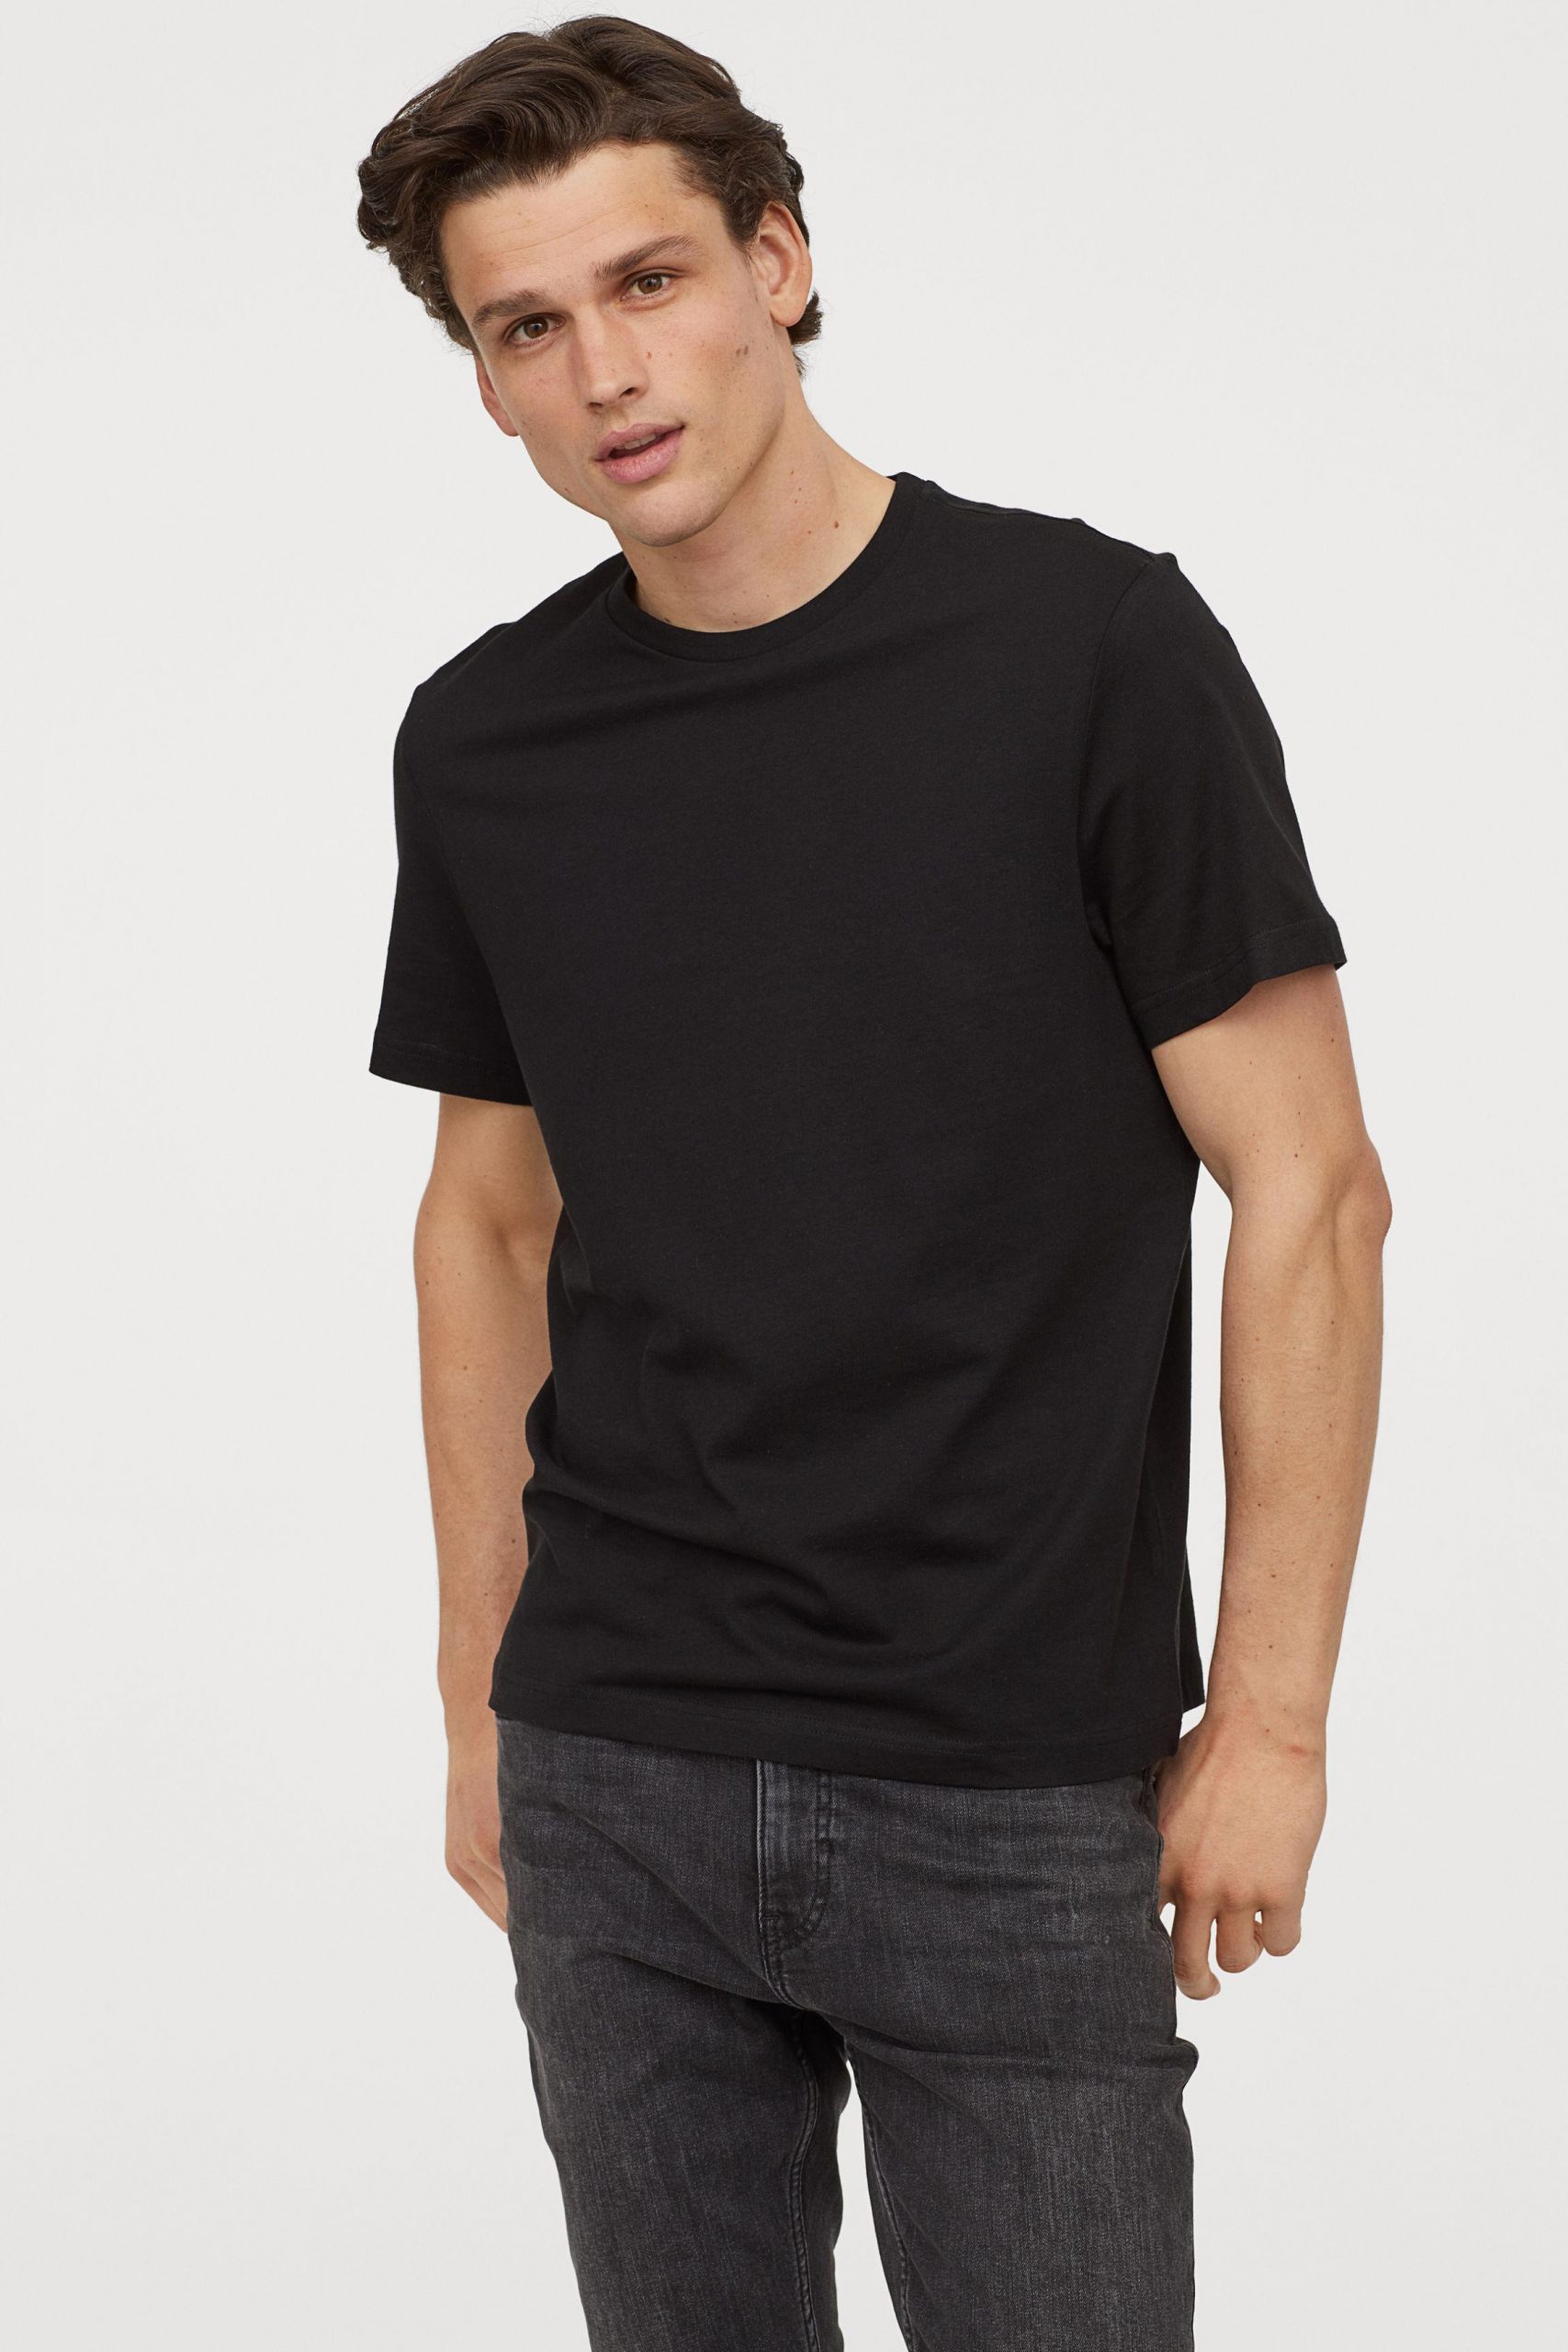 Hm 5Pack Tshirts Regular Fit In Black For Men  Lyst